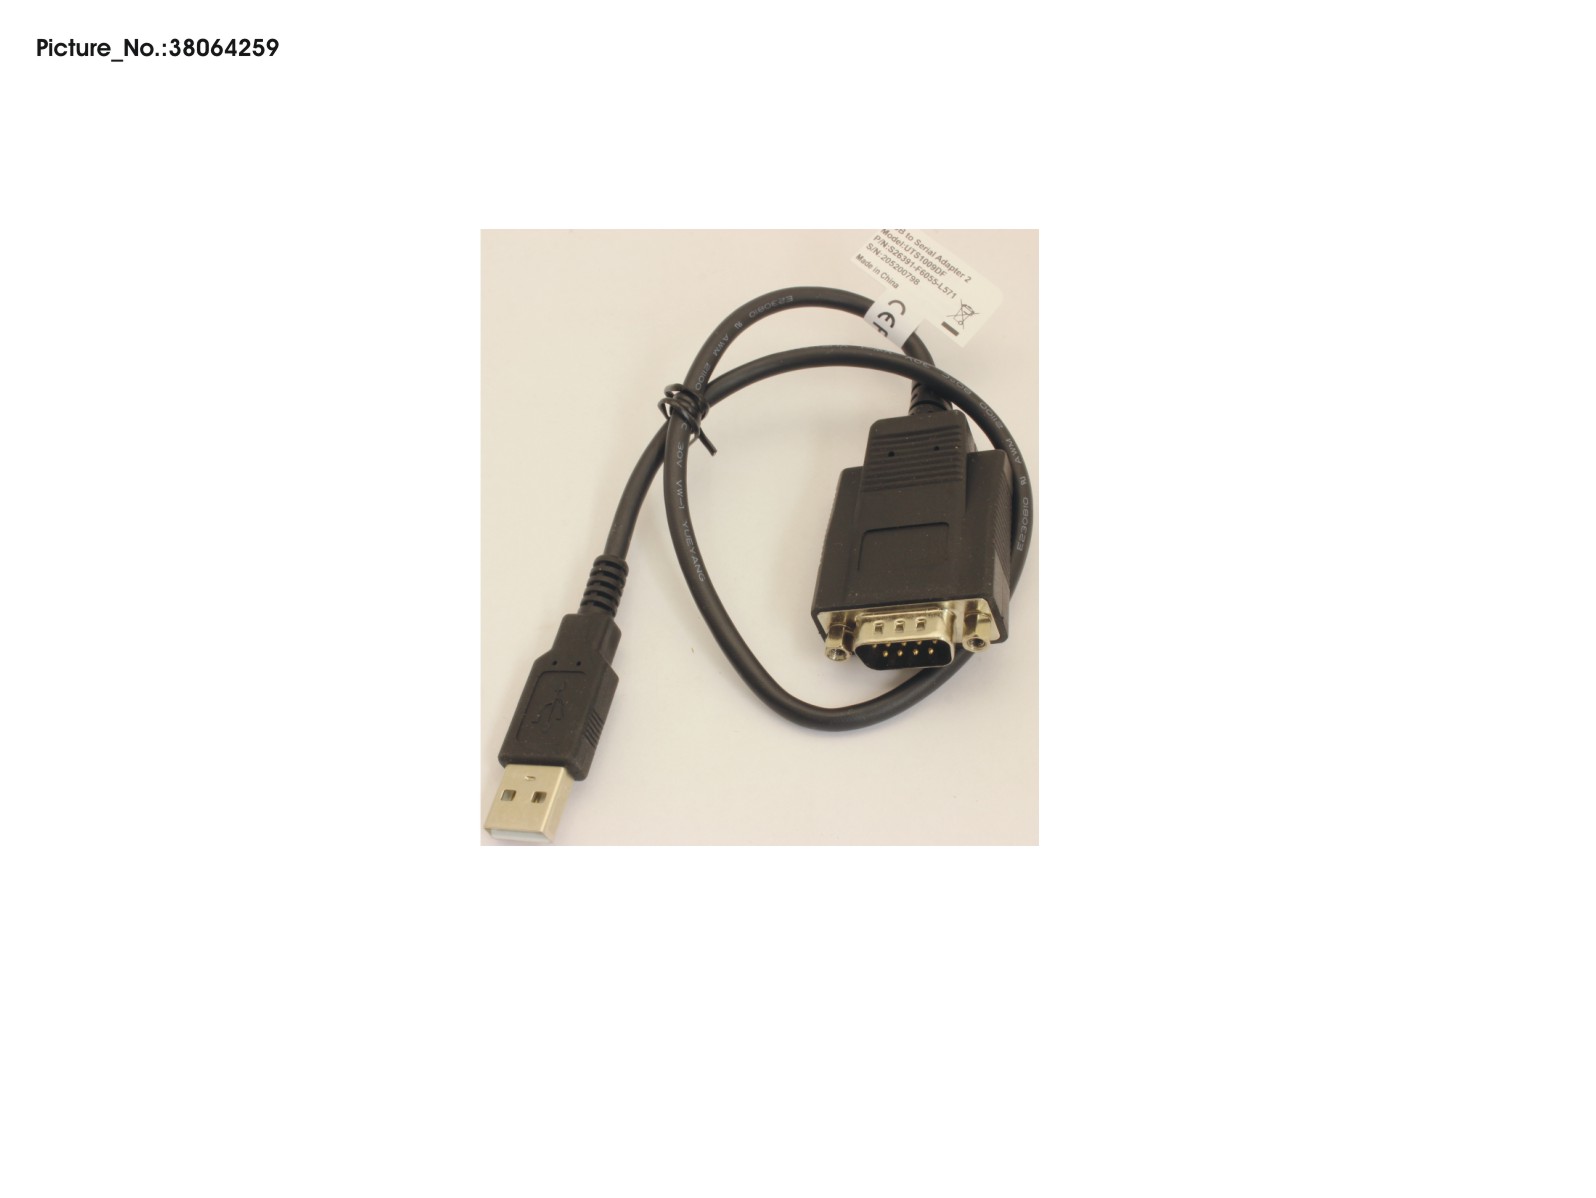 FUJITSU USB TO SERIAL ADAPTER 50cm